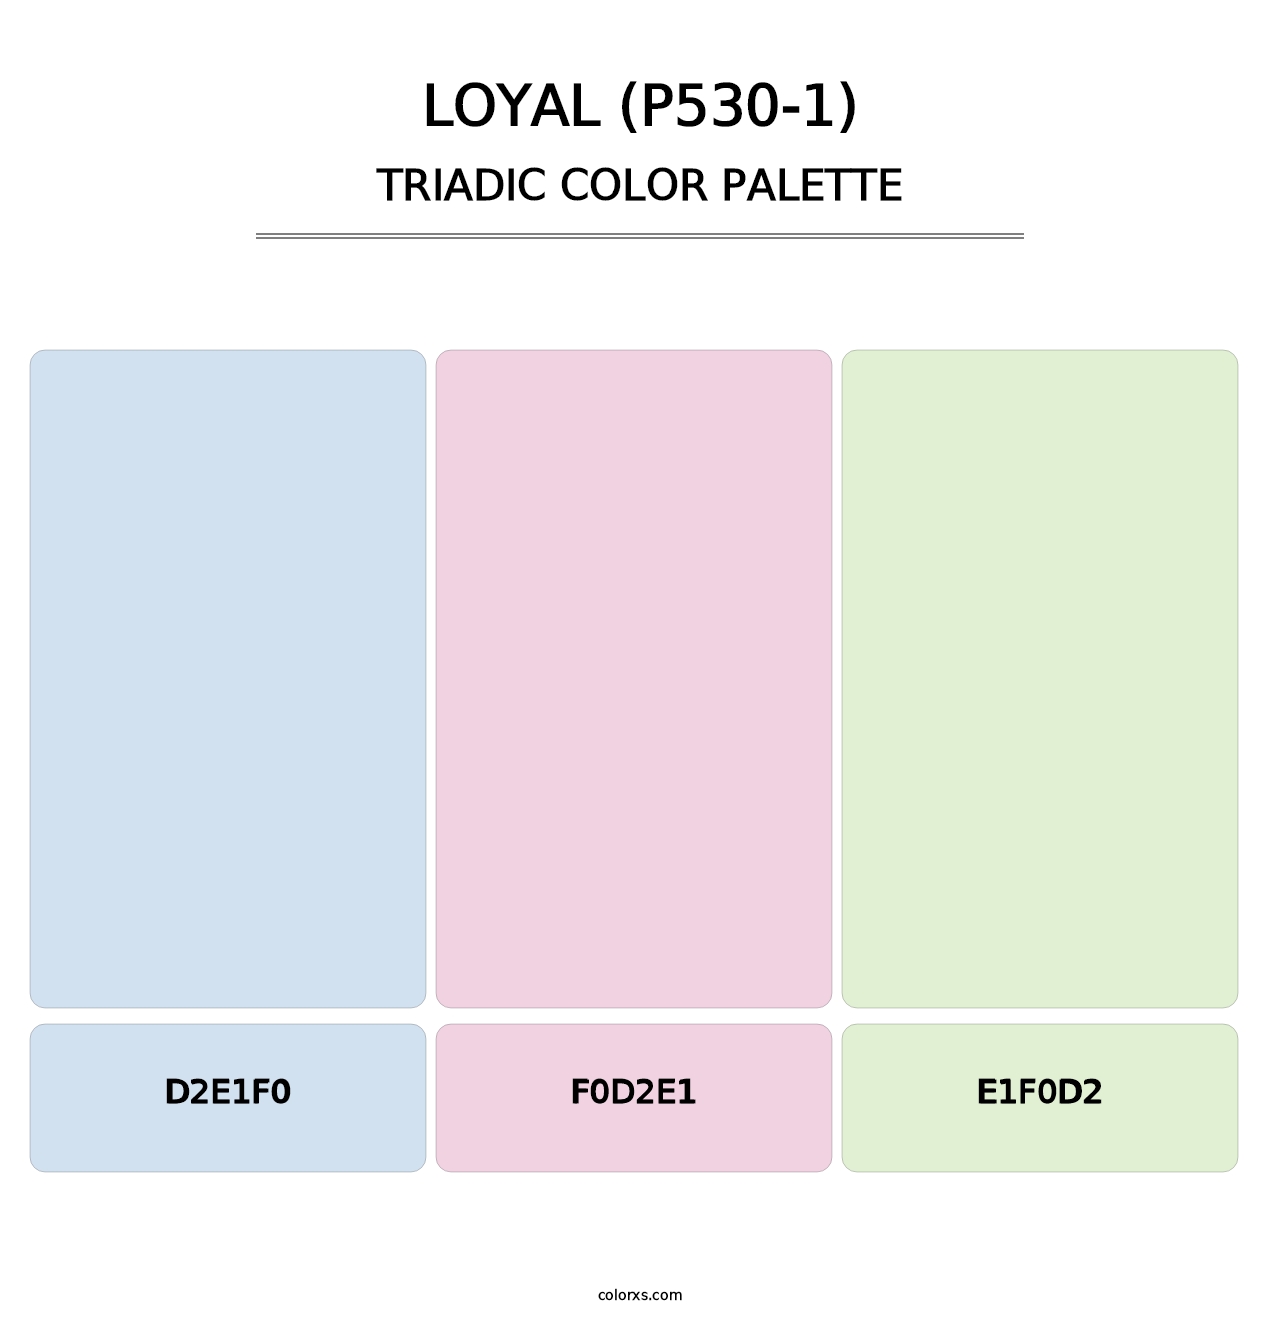 Loyal (P530-1) - Triadic Color Palette